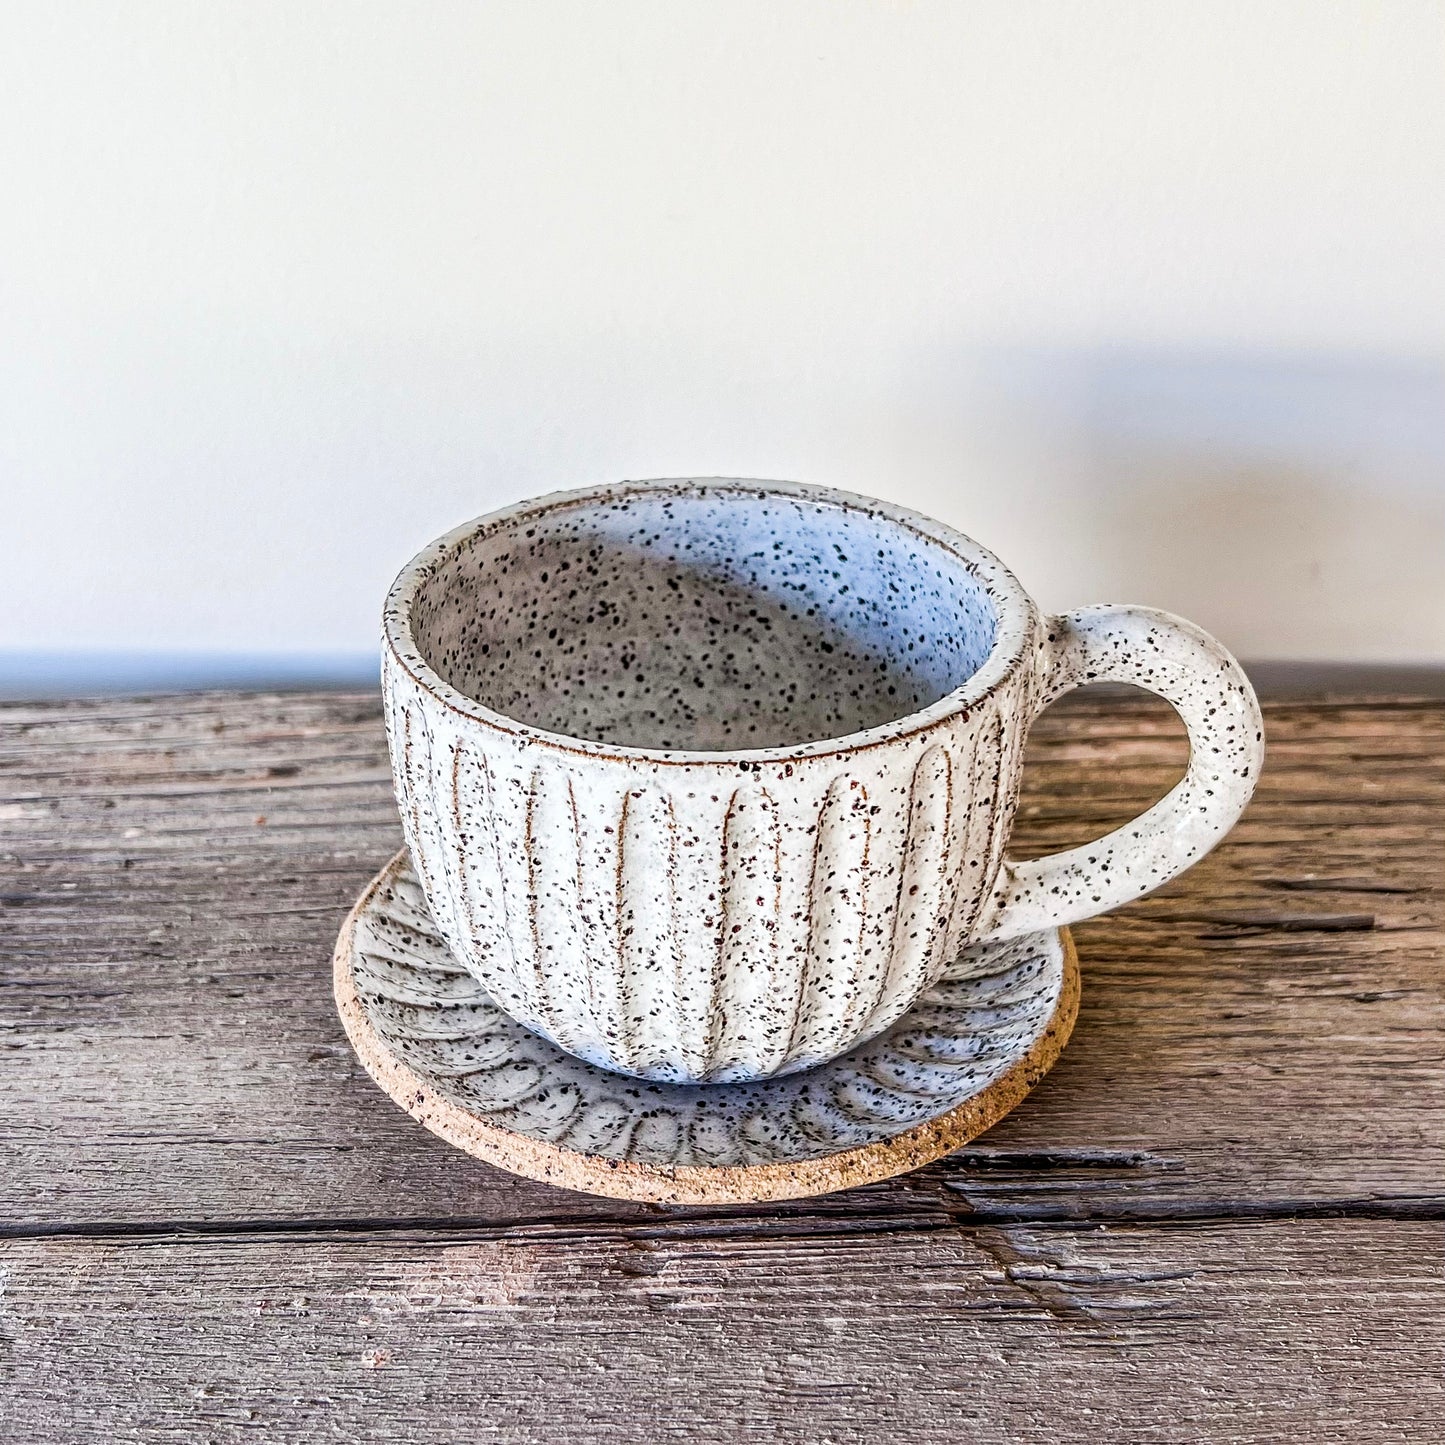 Ceramic Tea Cup & Saucer